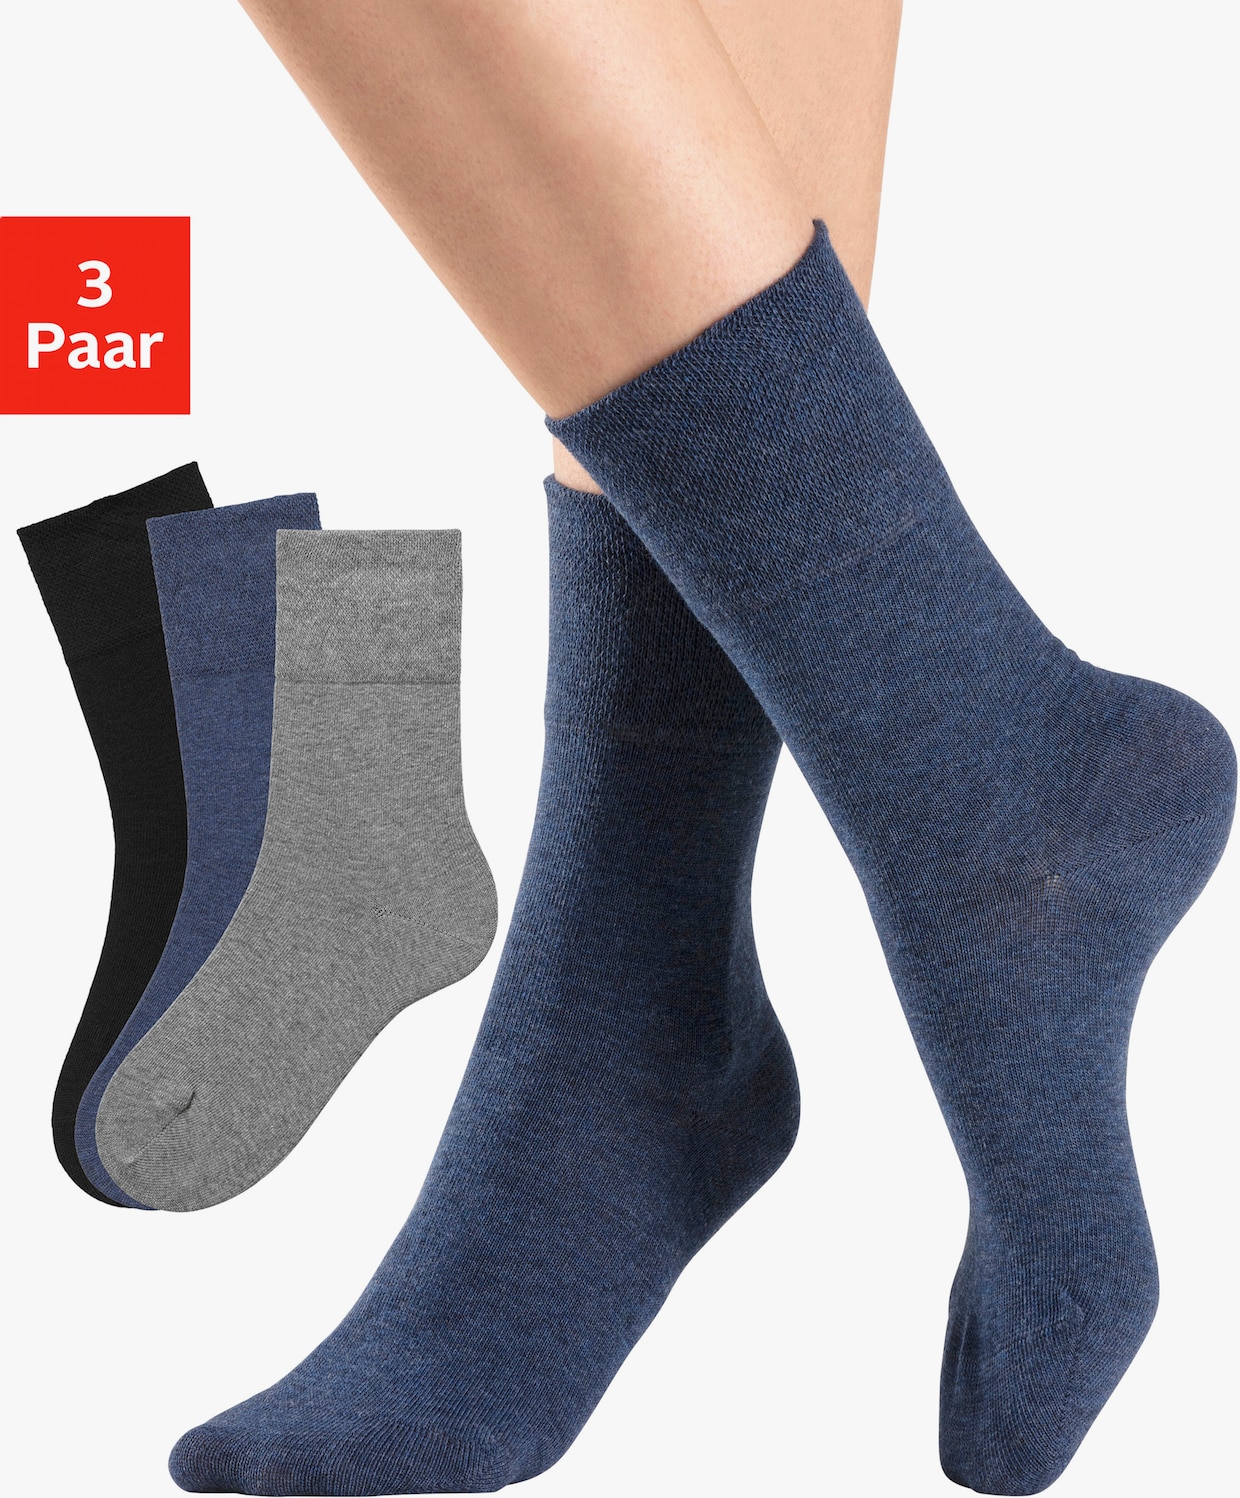 H.I.S Socken - 1x jeans, 1x schwarz, 1x grau-meliert